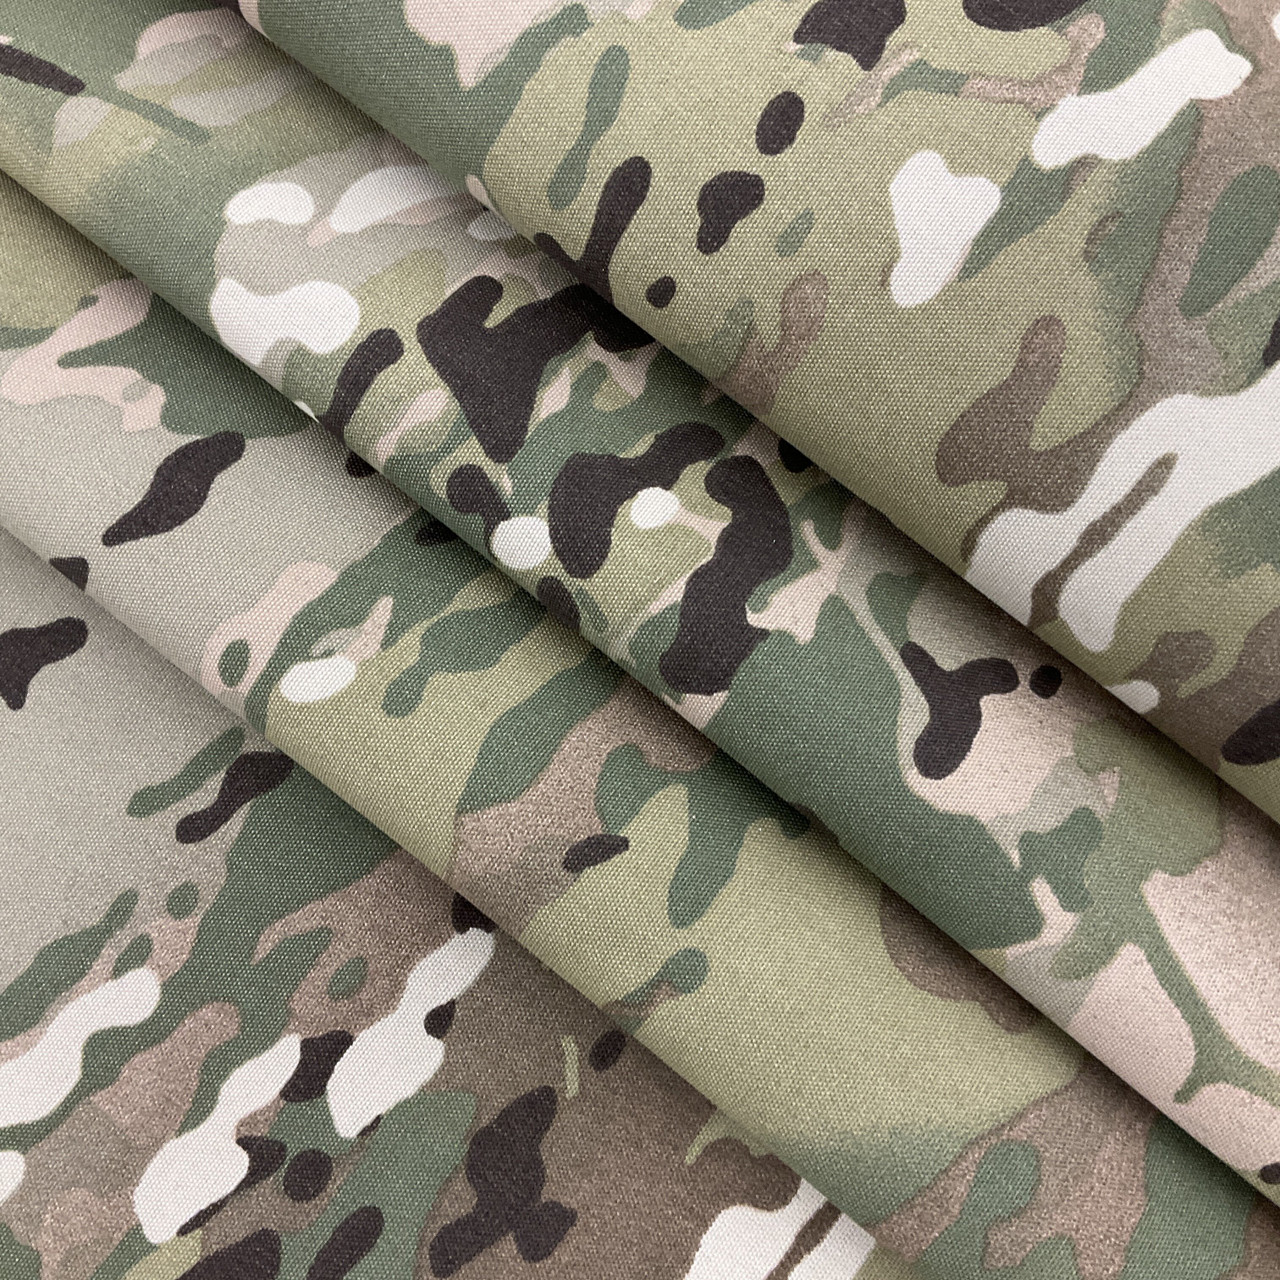 Plain Wool Blend in Army Green - Medium weight wool fabric